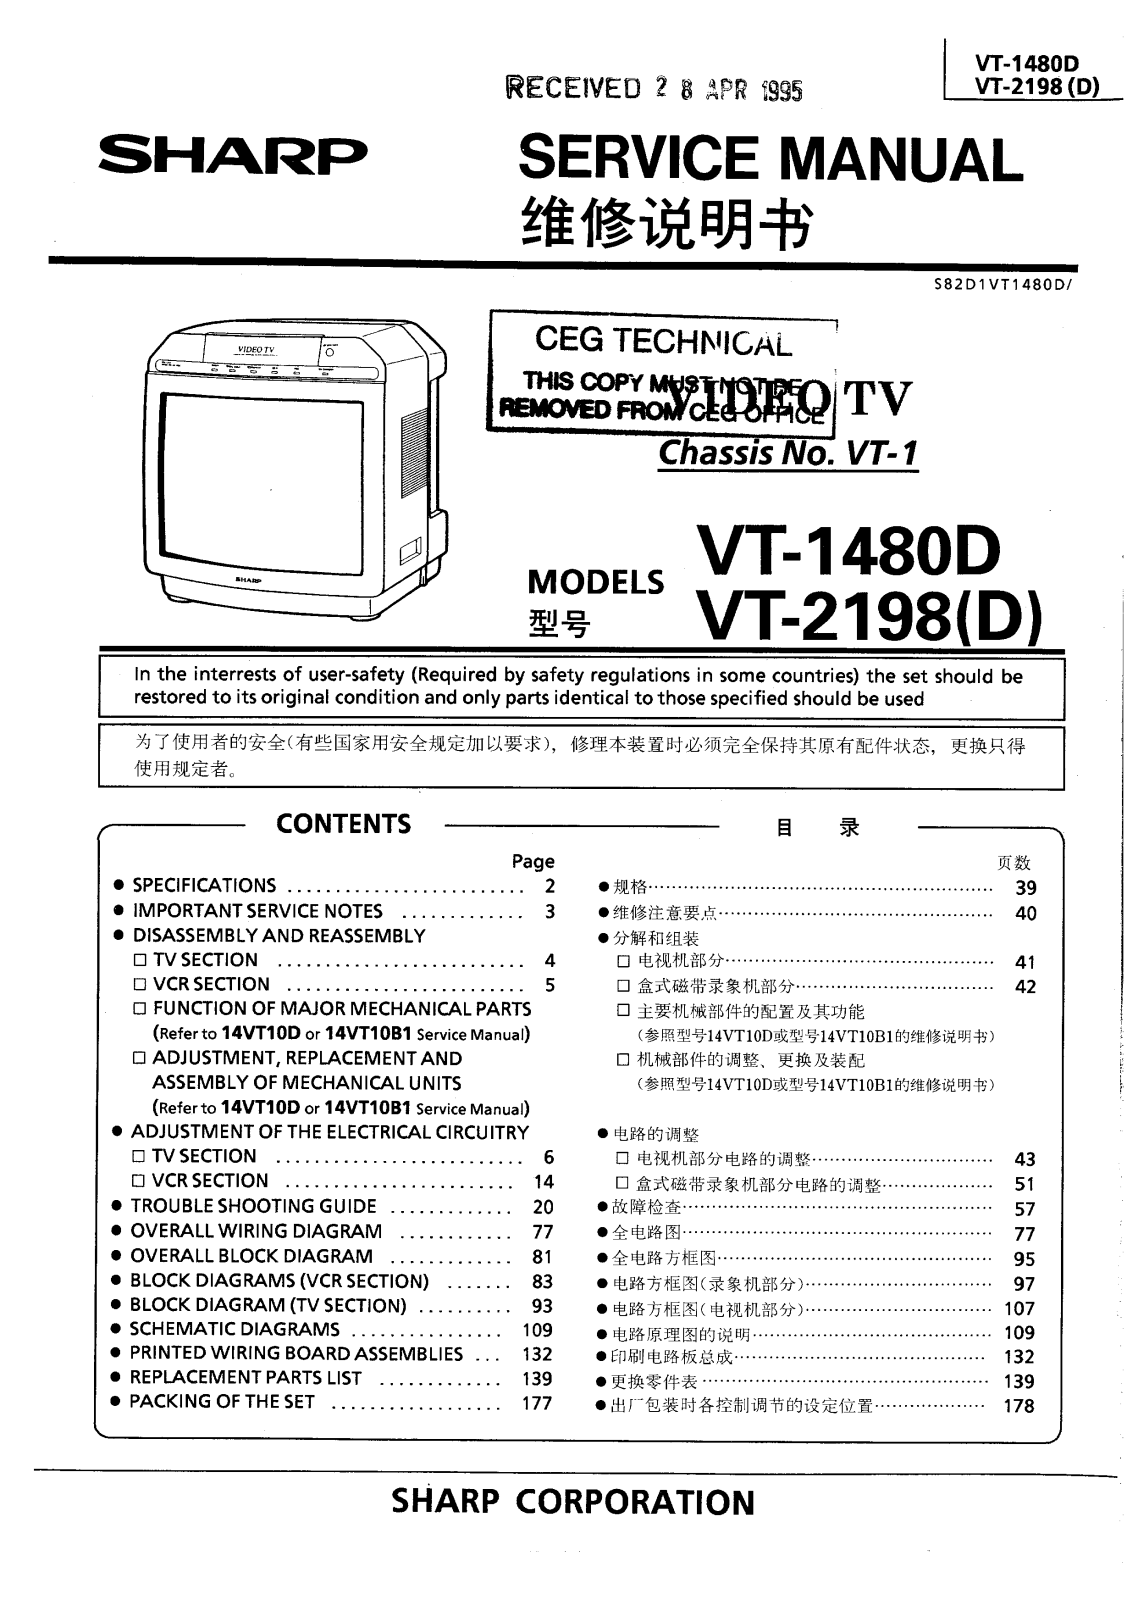 Sharp VT1490, VT2198 Service Manual